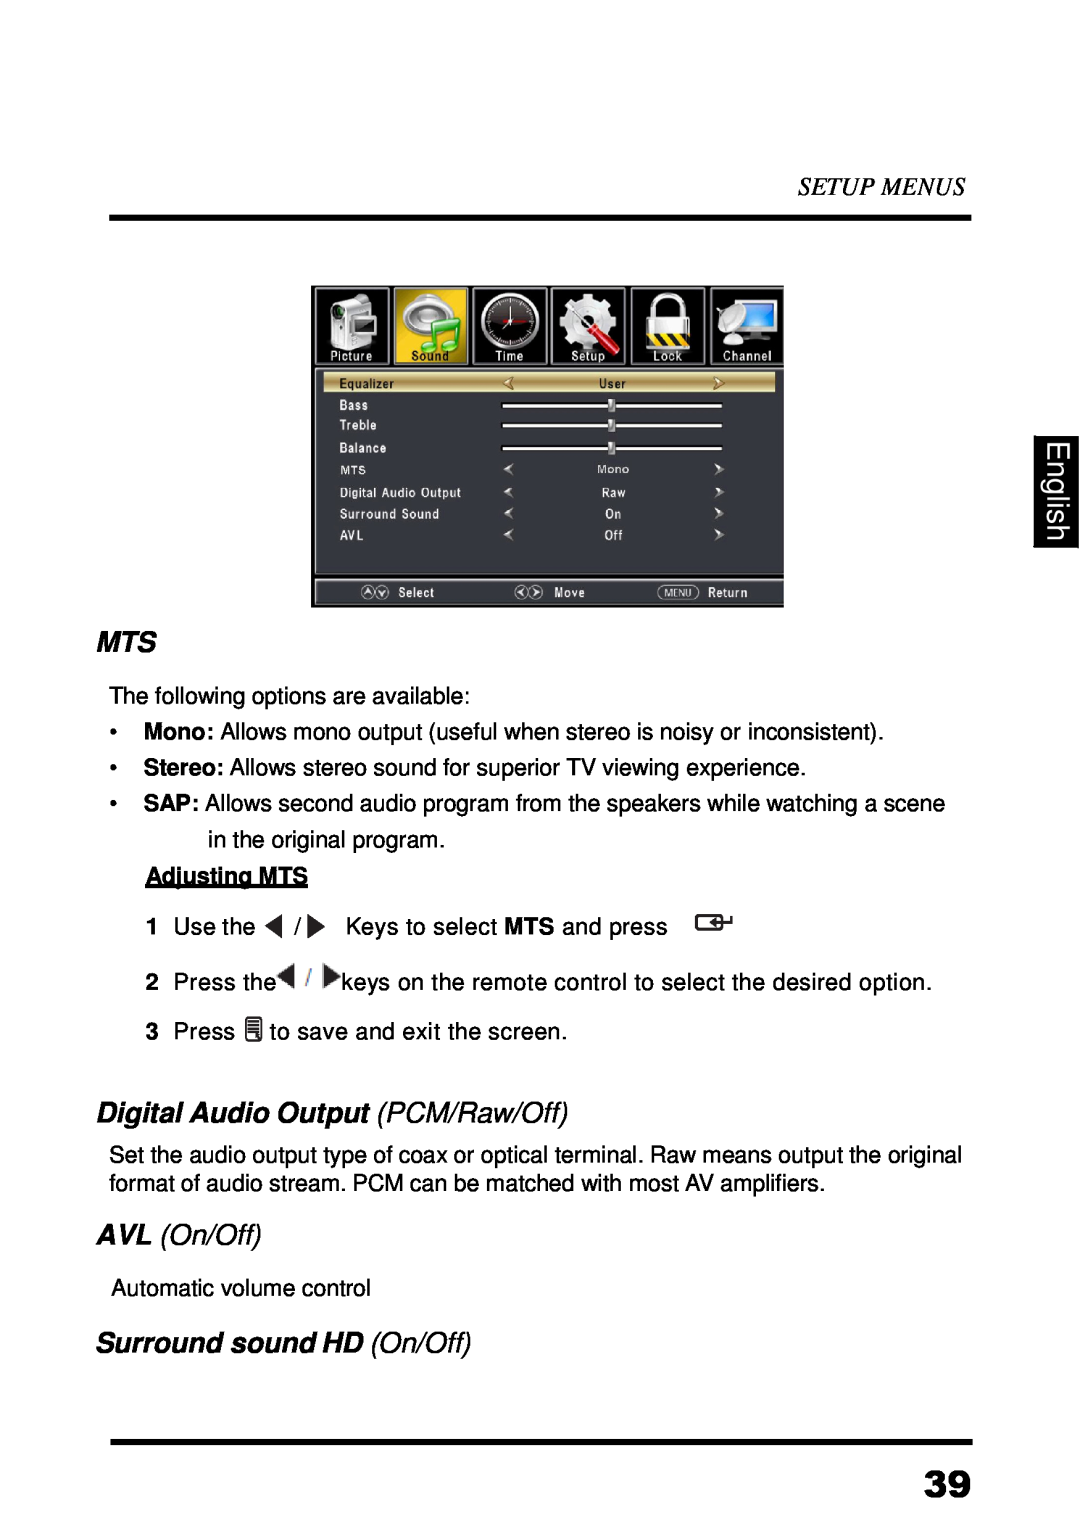 Westinghouse UW48T7HW manual Digital Audio Output PCM/Raw/Off, AVL On/Off, Surround sound HD On/Off, English, Setup Menus 